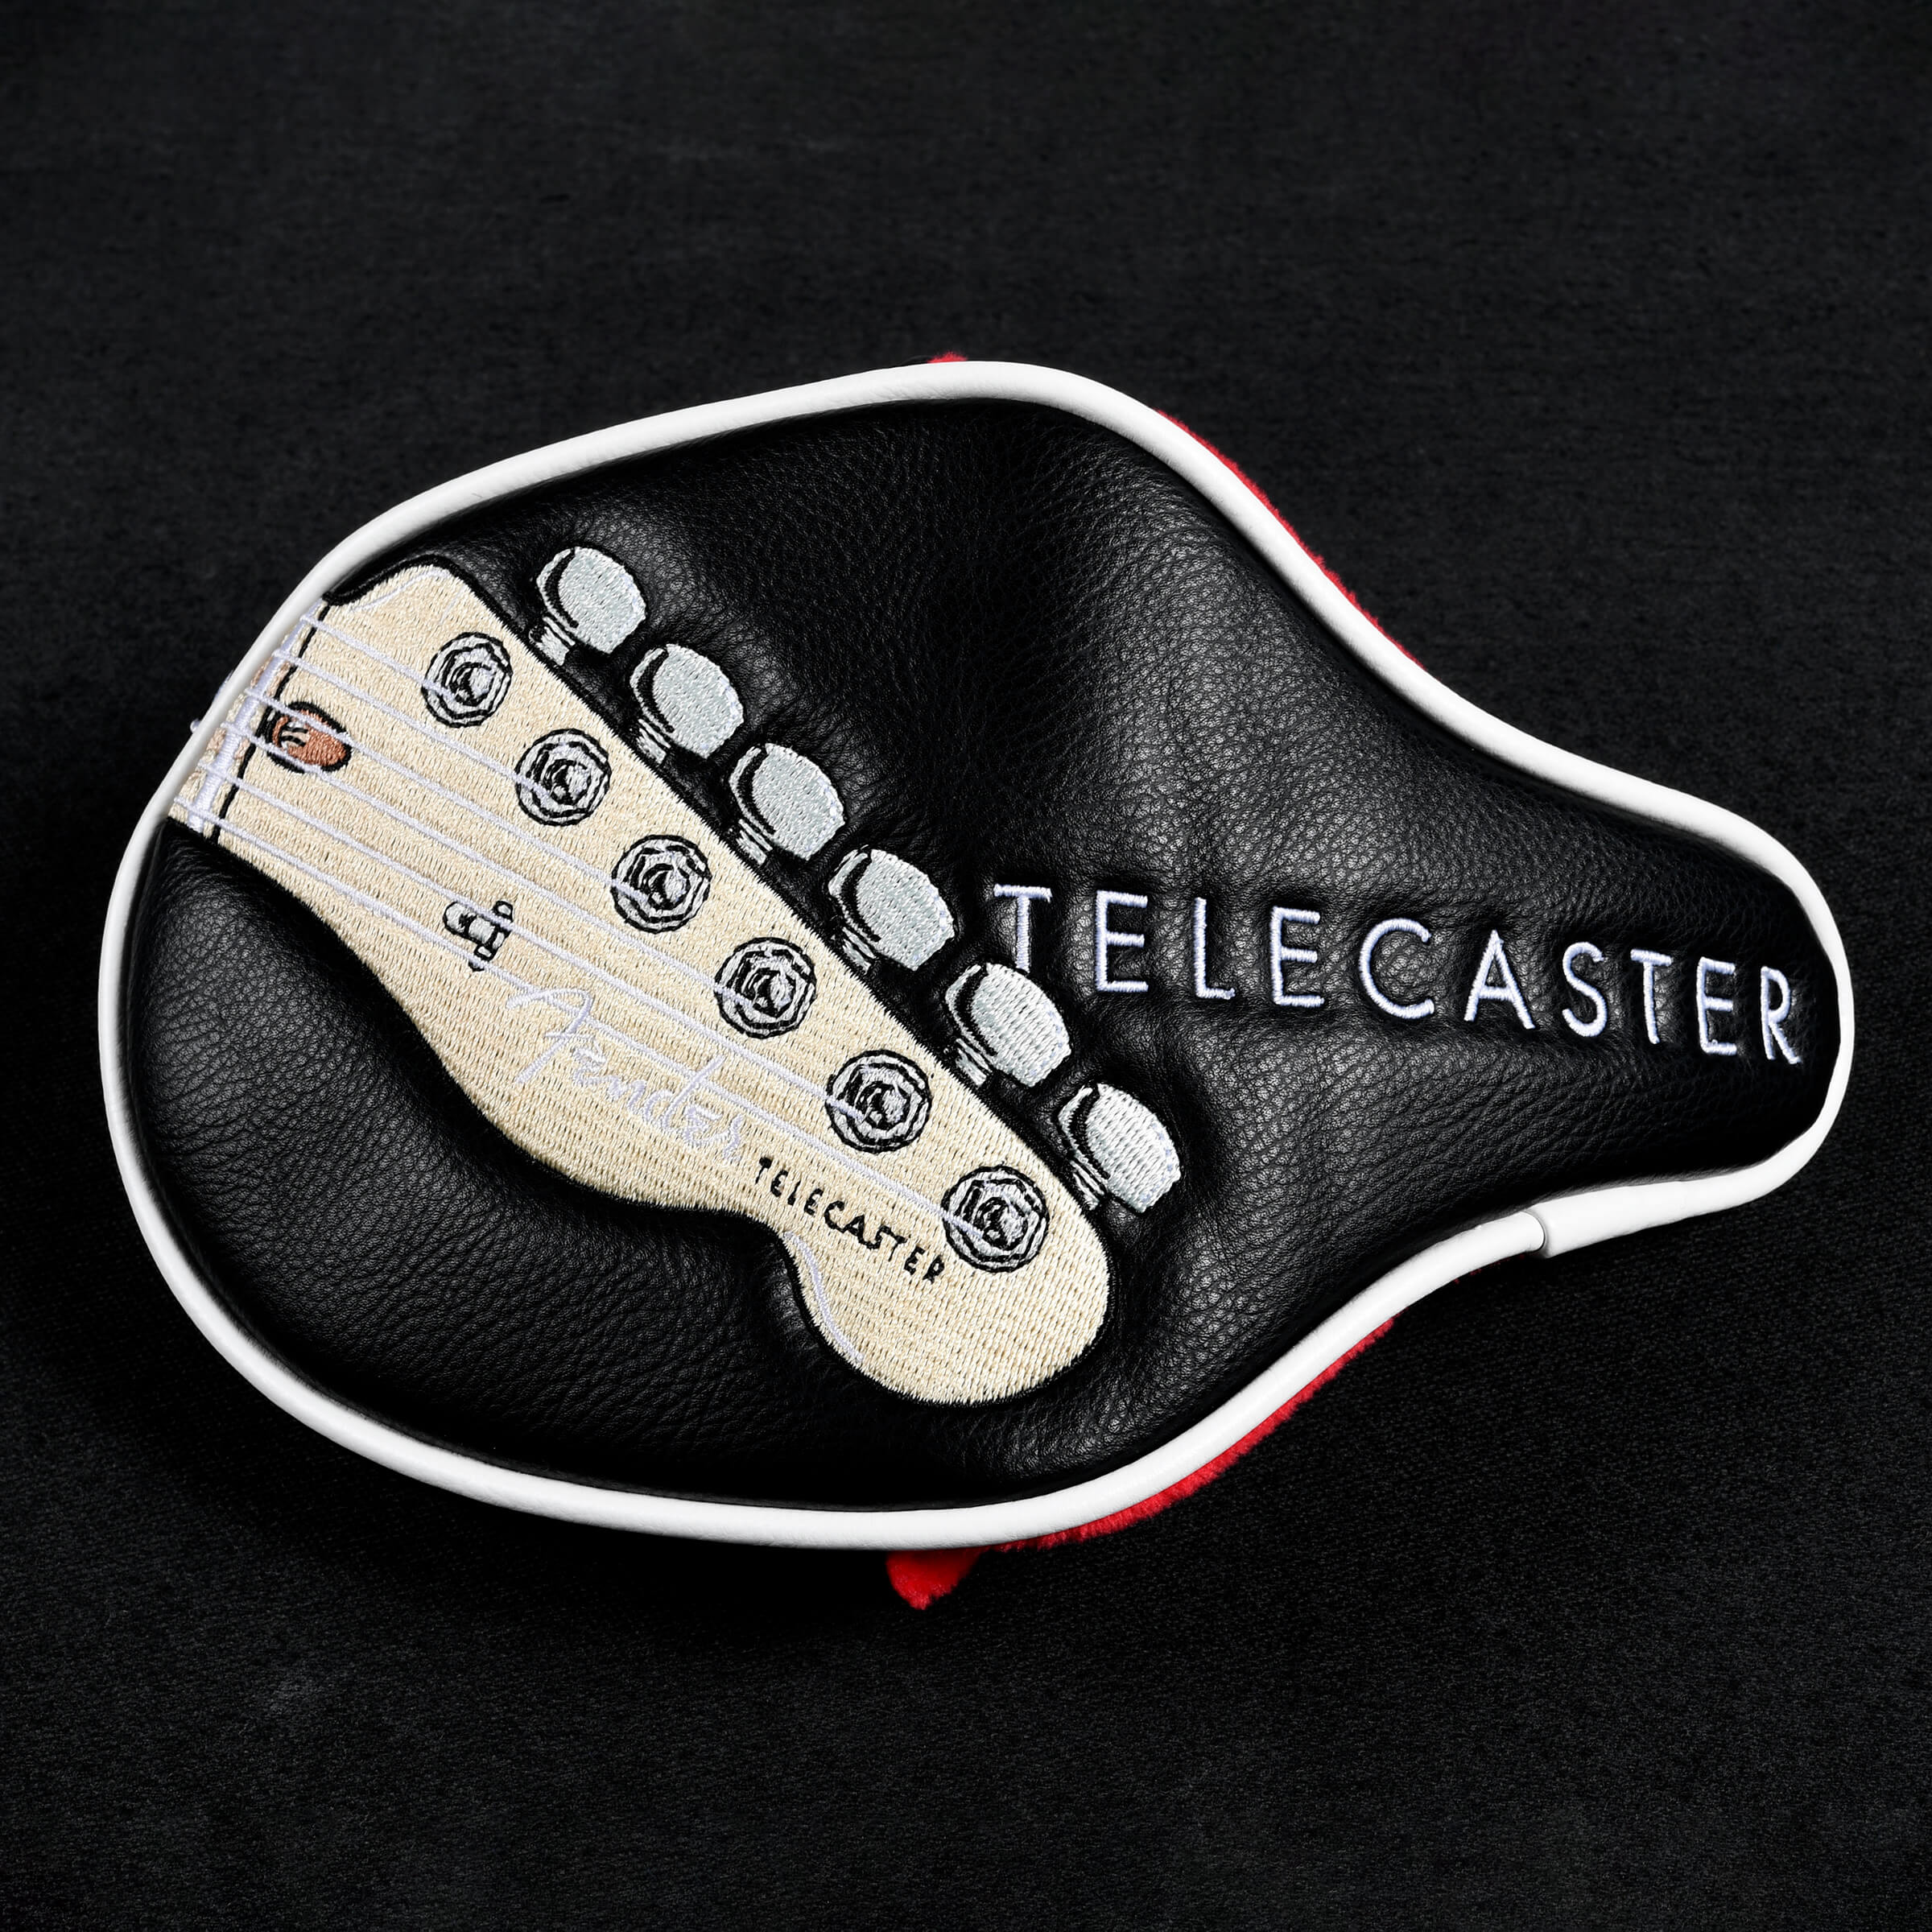 Fender Telecaster - Putter Mallet Cover